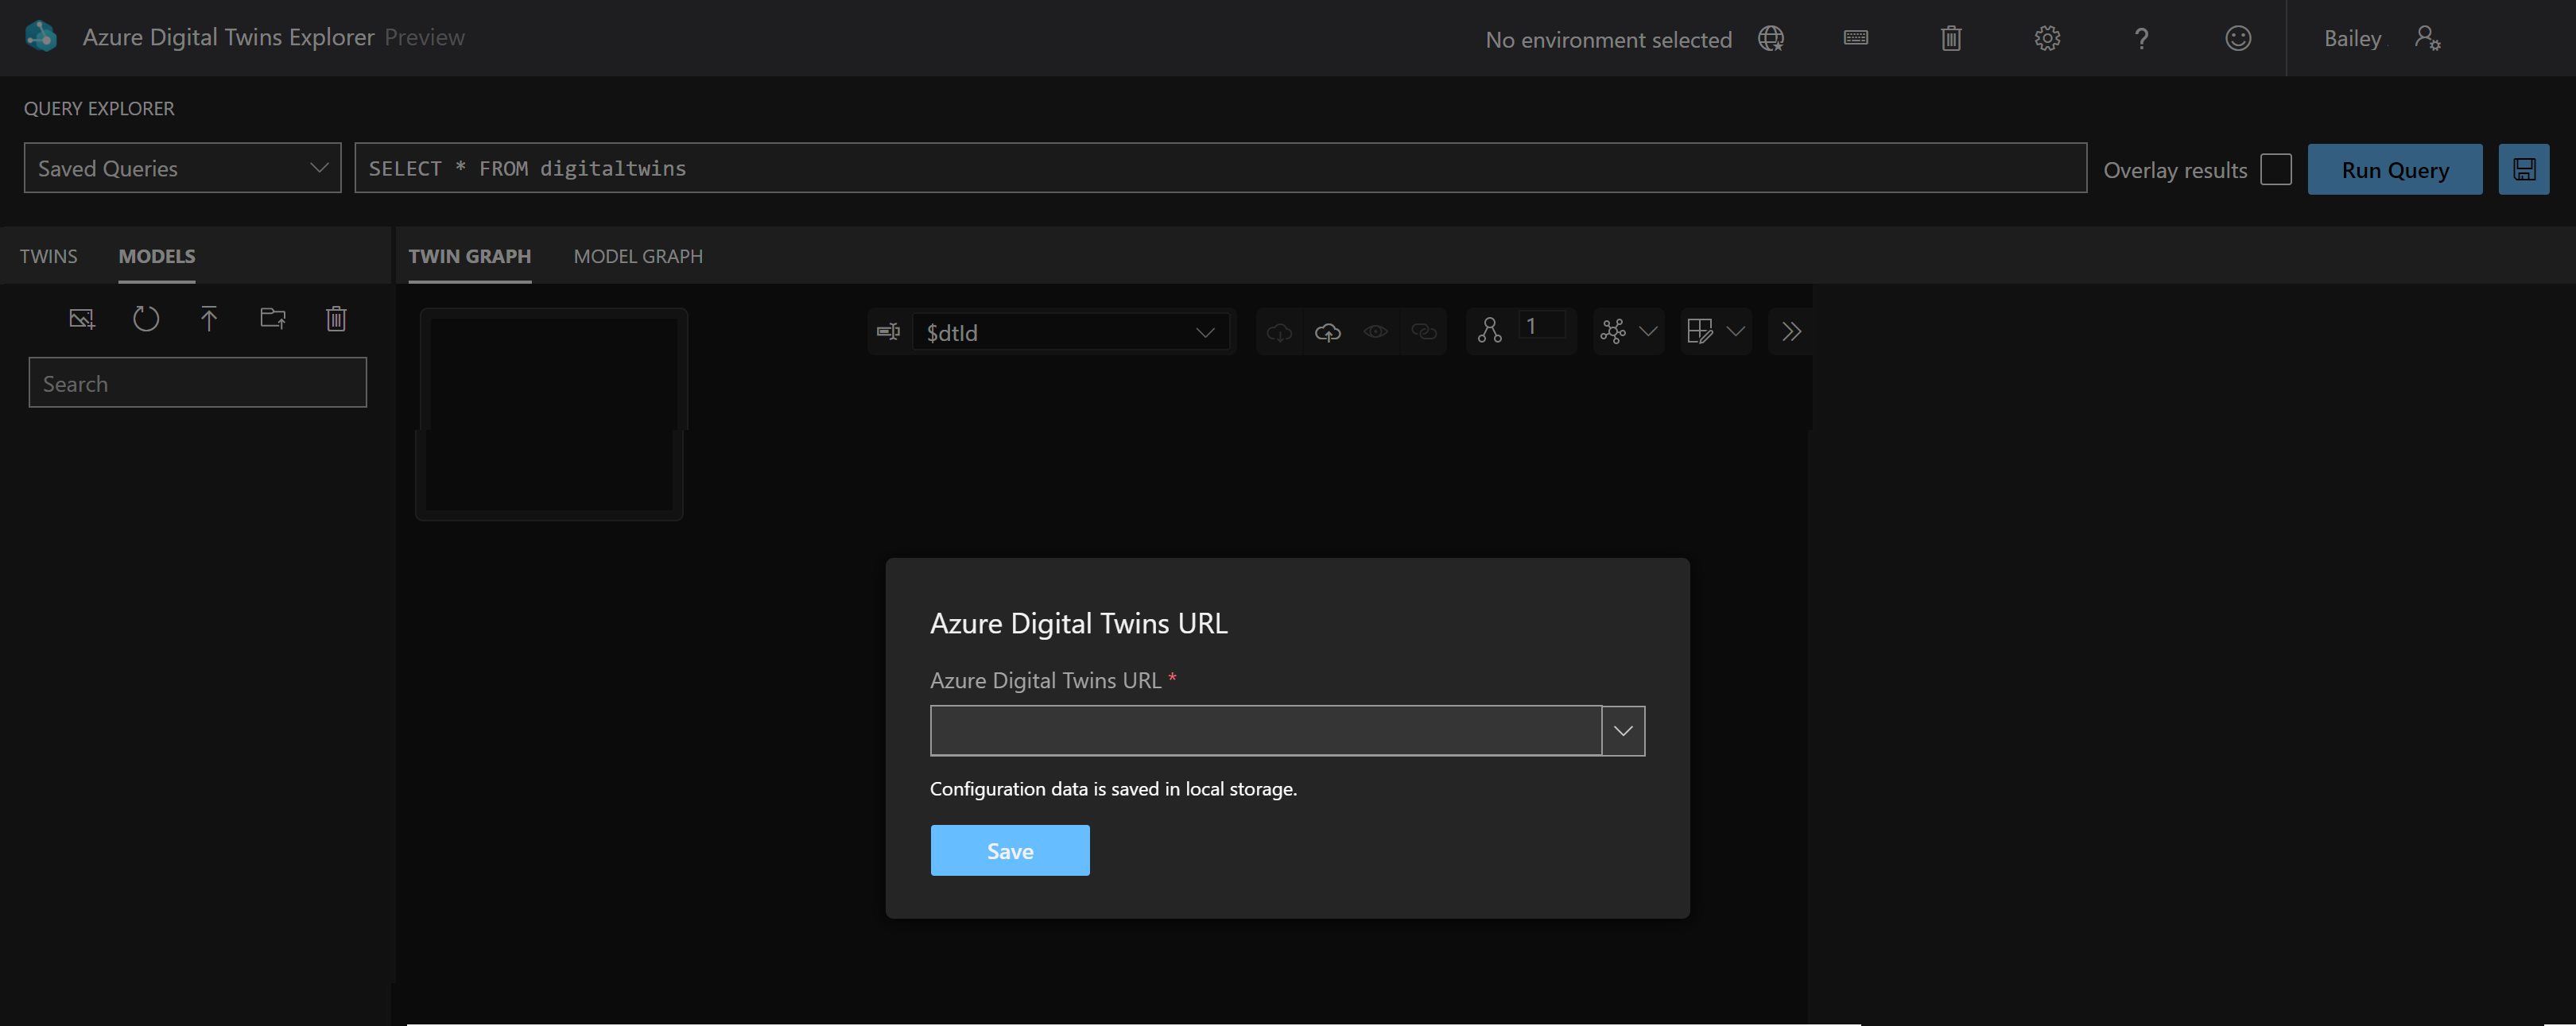 Azure Digital Twins Explorer 的屏幕截图。Azure 数字孪生 URL 模式显示了 Azure 数字孪生 URL 的空白可编辑框。